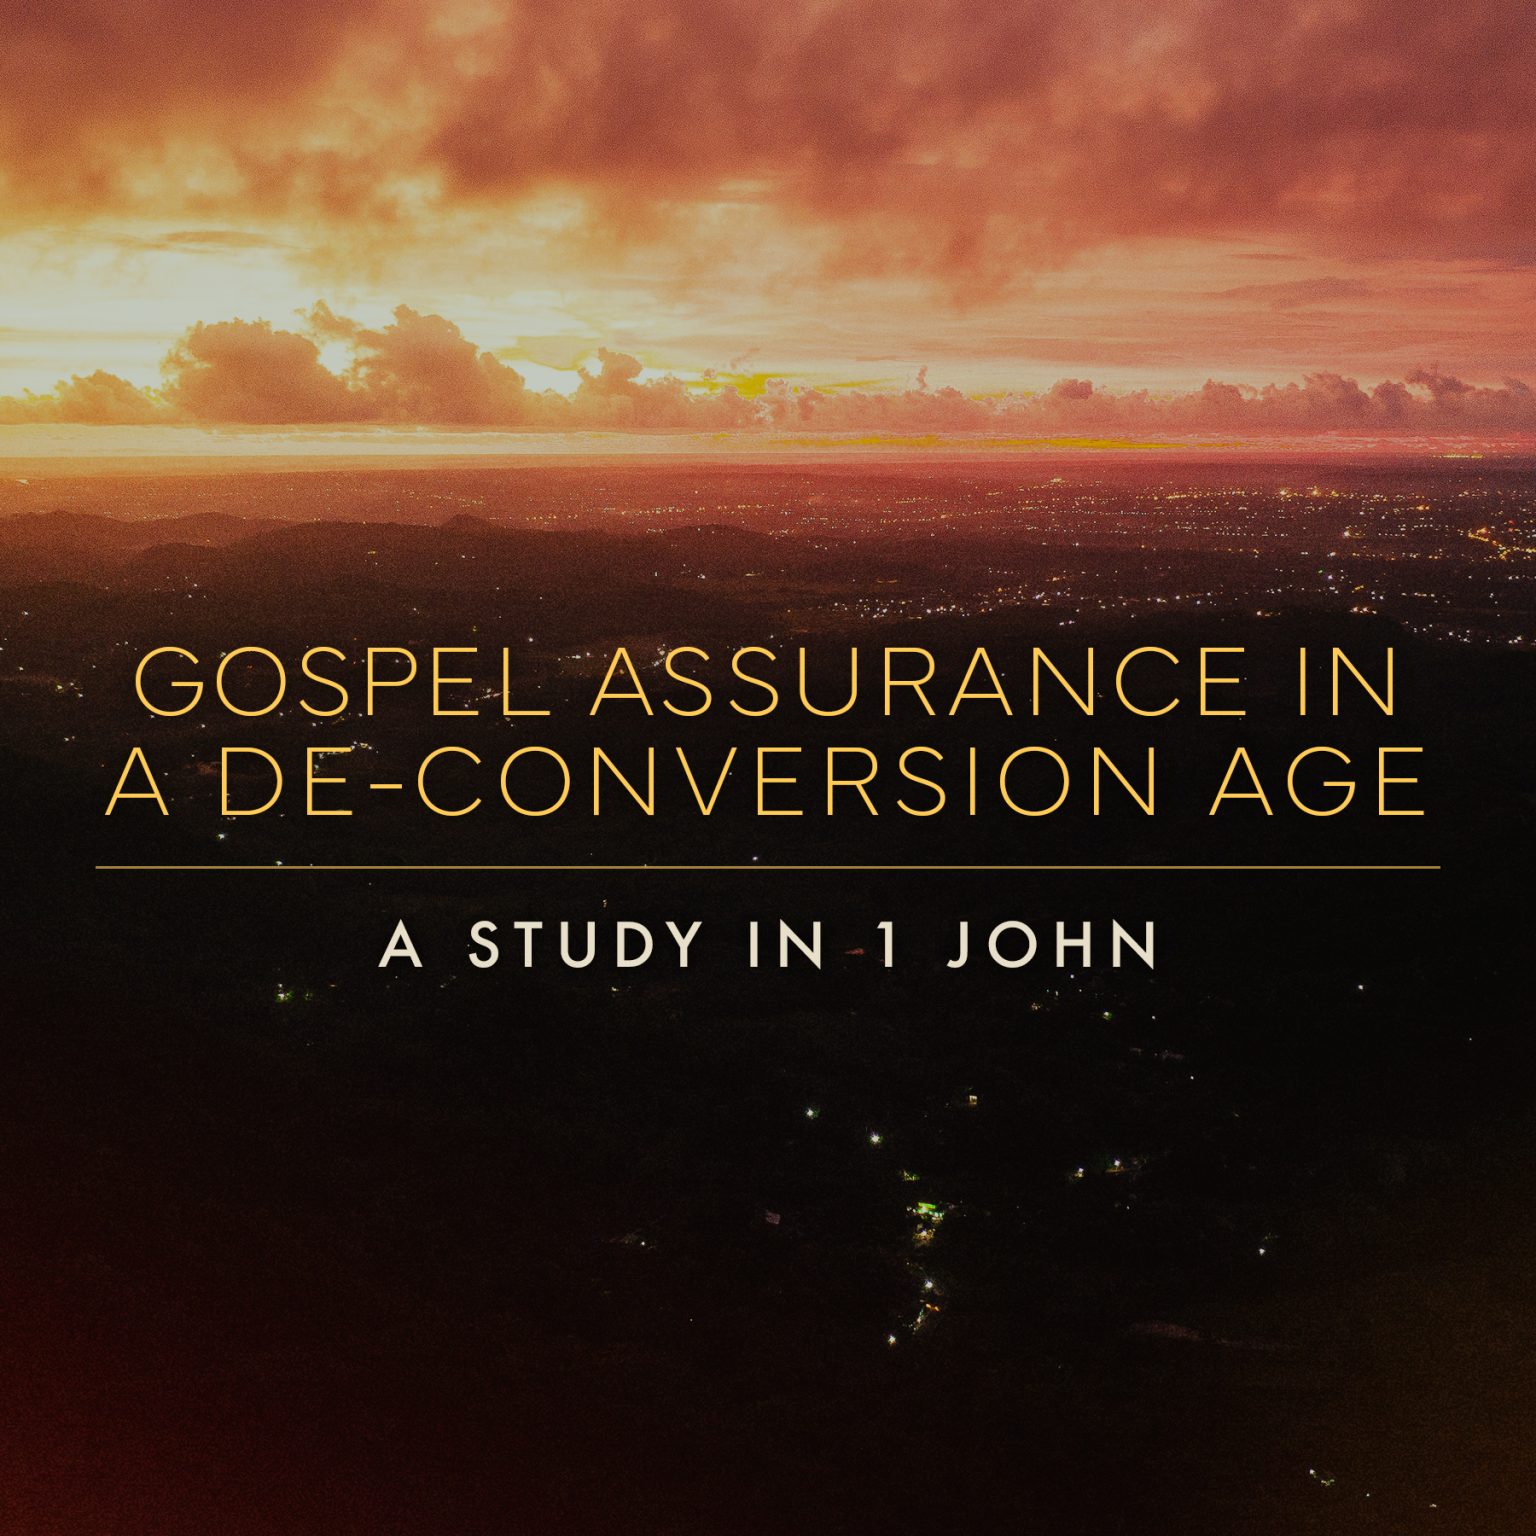 Gospel Assurance in a De-Conversion Age